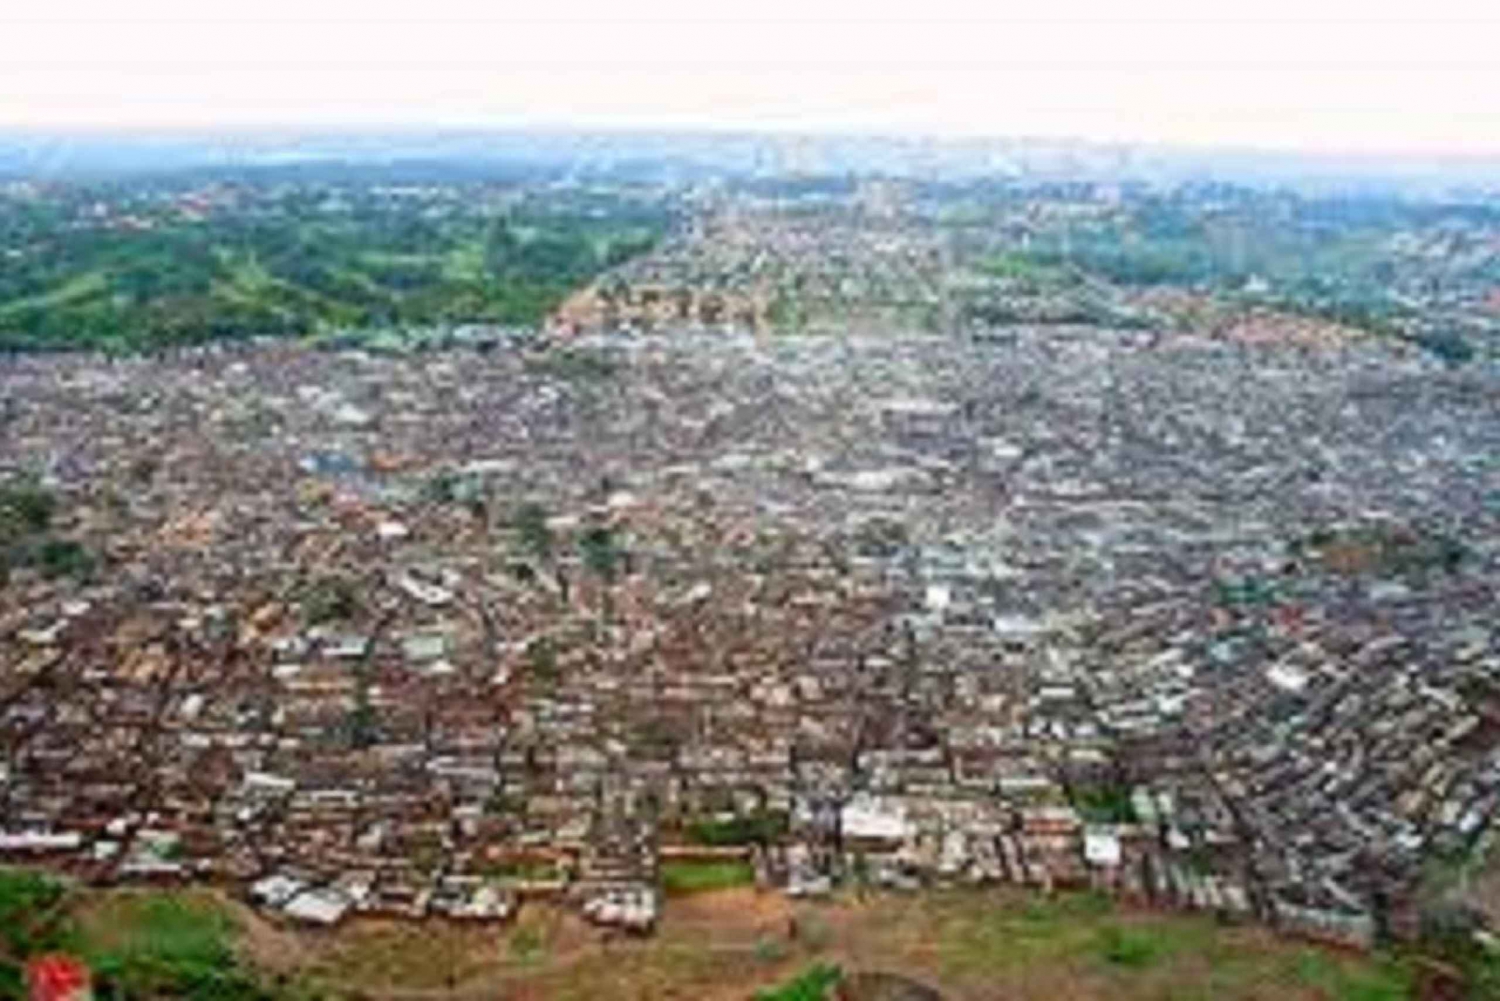 Omvisning i slummen i Kibera